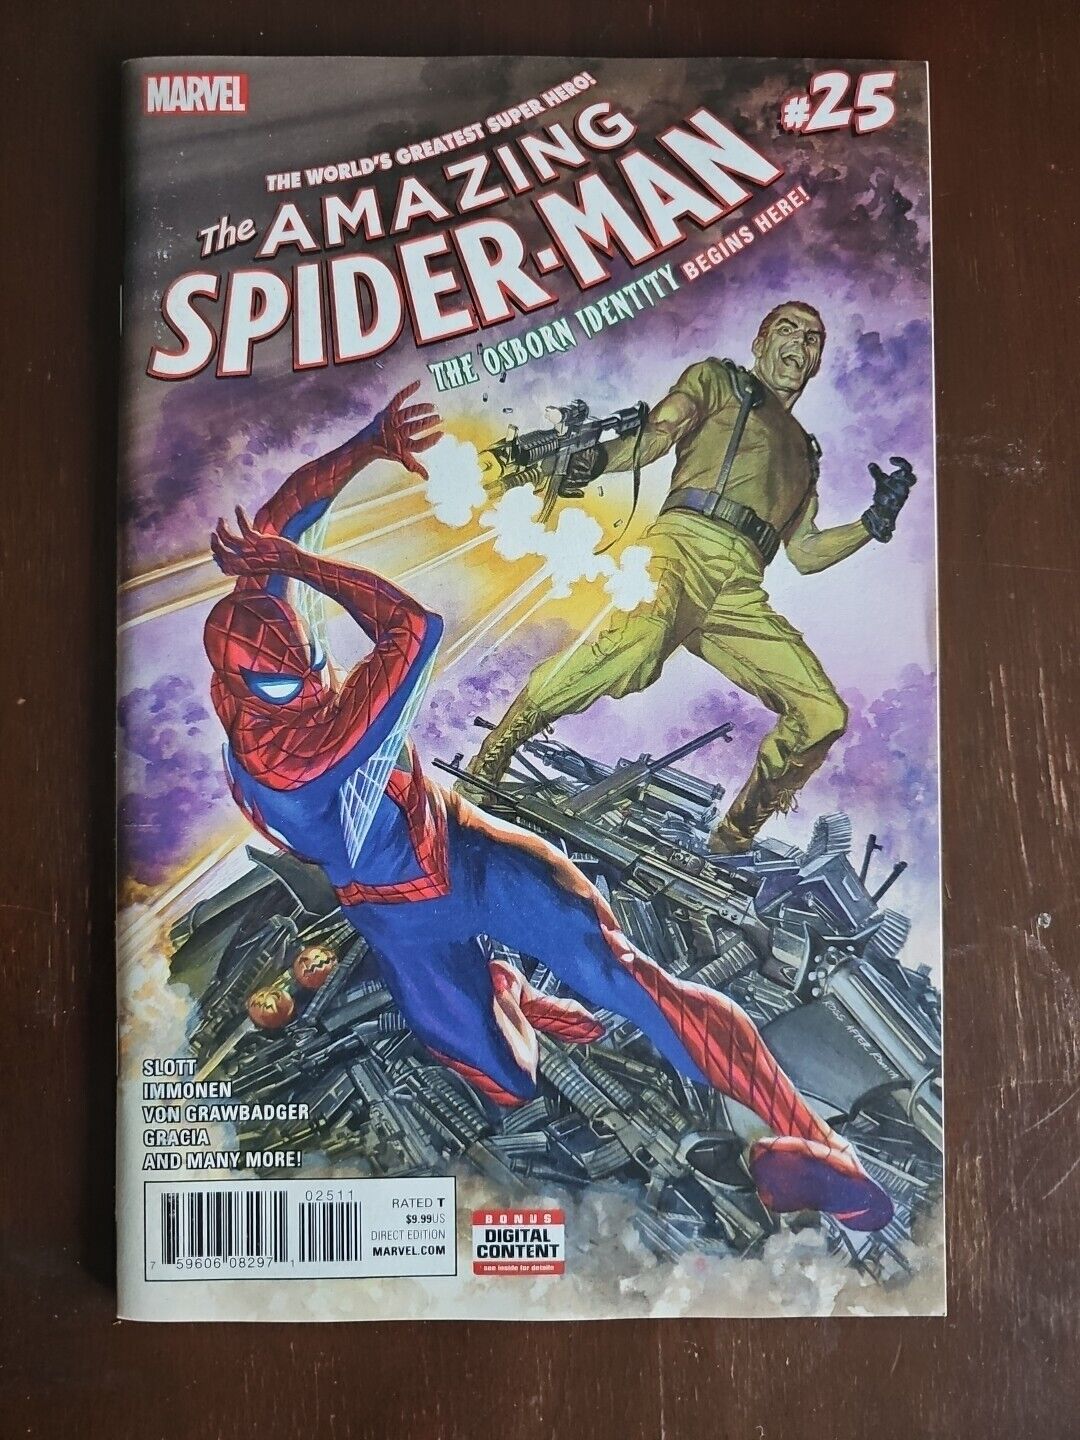 Amazing Spider-Man #25 KEY! "Osborn Identity", New Superior Octopus Suit PC3